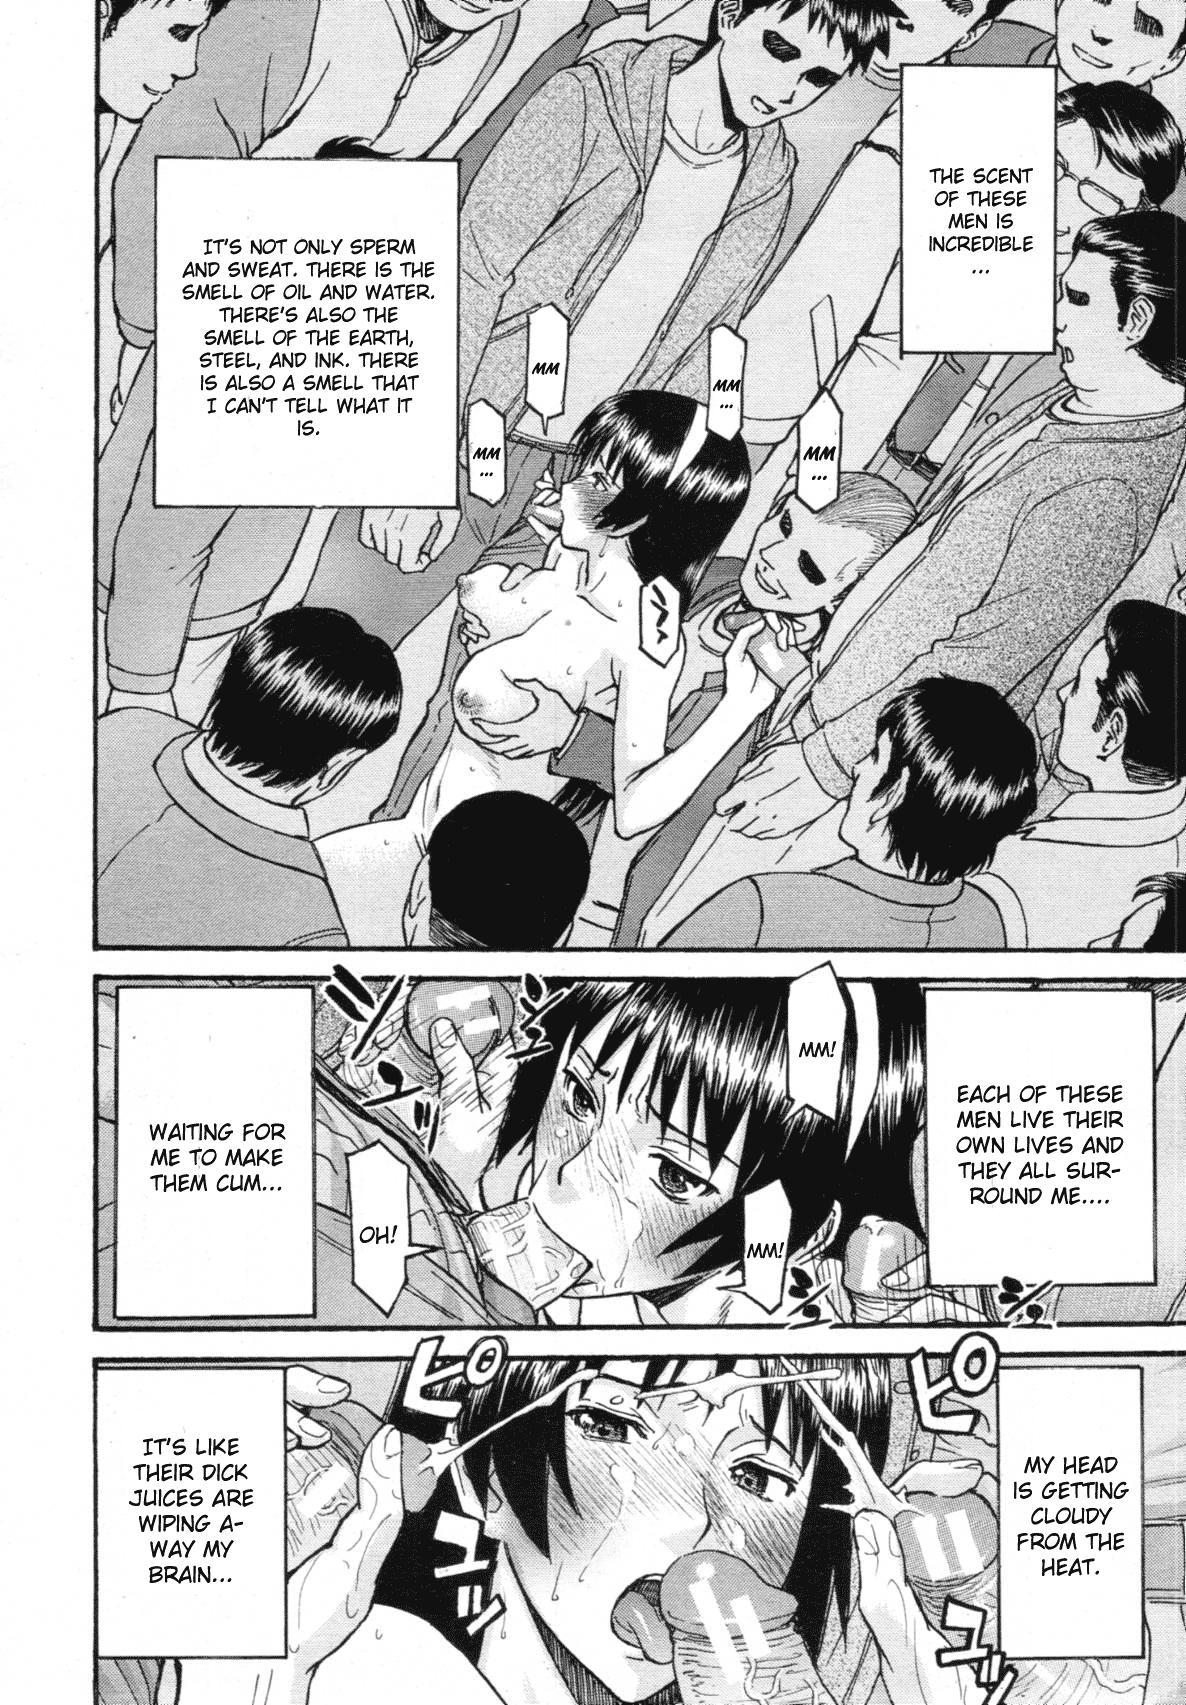 Sailor Fuku to Strip Chapter 3 19